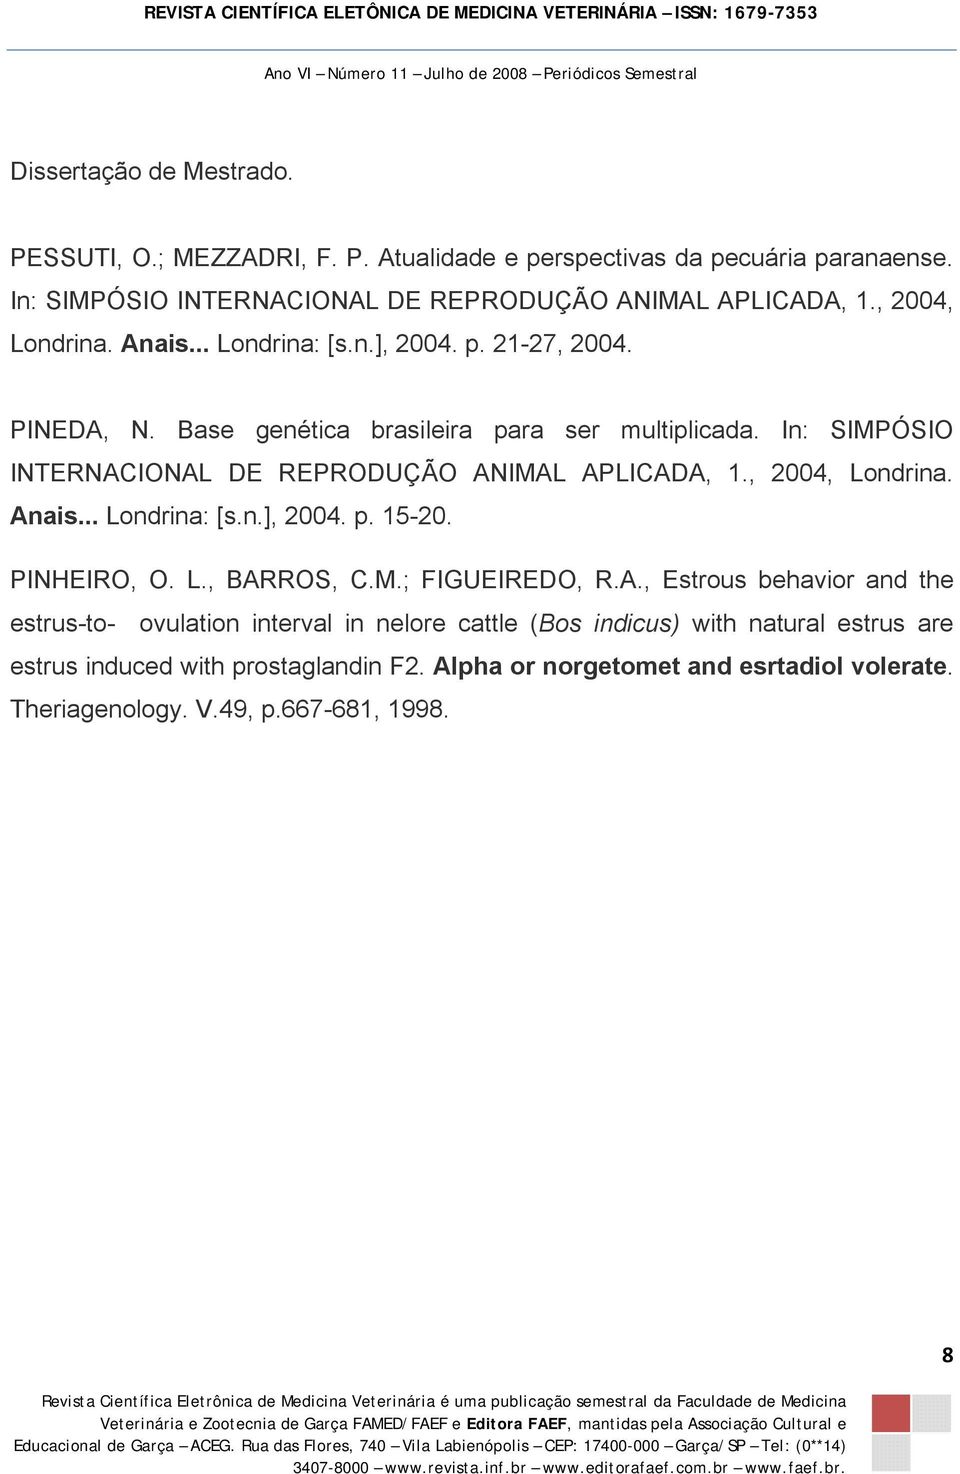 In: SIMPÓSIO INTERNACIONAL DE REPRODUÇÃO ANIMAL APLICADA, 1., 2004, Londrina. Anais... Londrina: [s.n.], 2004. p. 15-20. PINHEIRO, O. L., BARROS, C.M.; FIGUEIREDO, R.A., Estrous behavior and the estrus-to- ovulation interval in nelore cattle (Bos indicus) with natural estrus are estrus induced with prostaglandin F2.